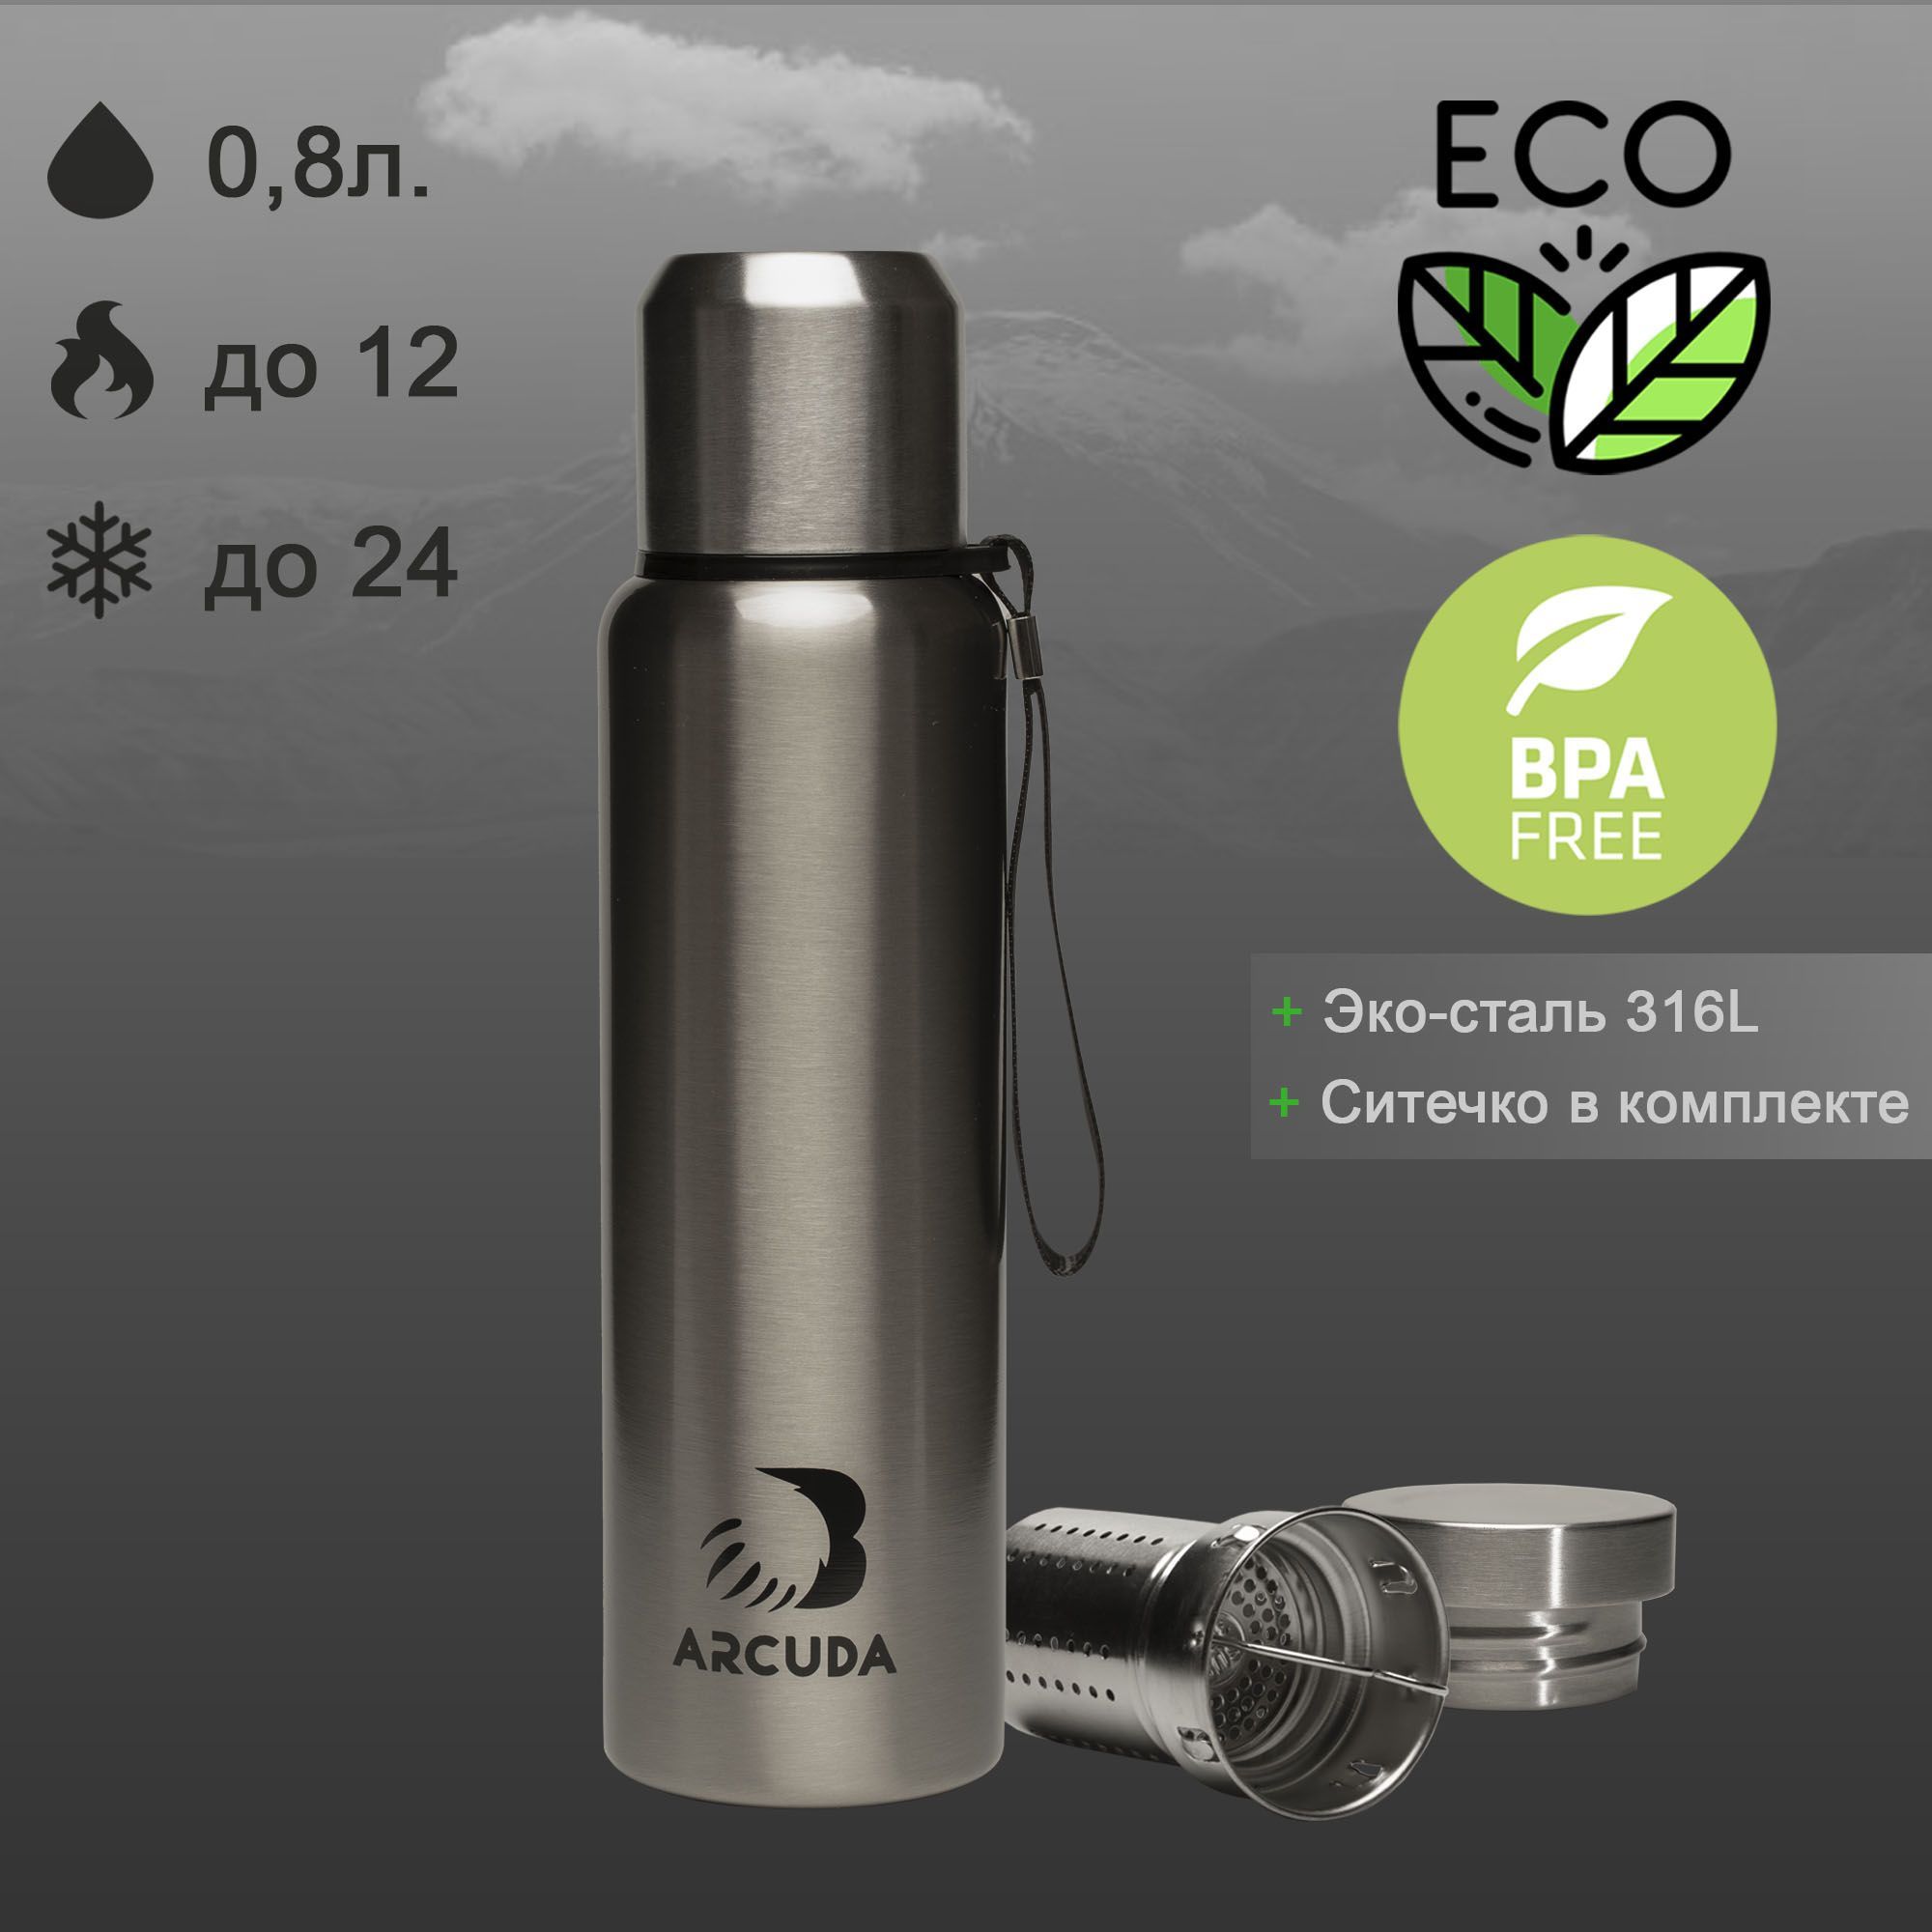 Термос ARCUDA ARC-Z85 Eco seria, крышка-чашка, 0.8 литр, серебристый